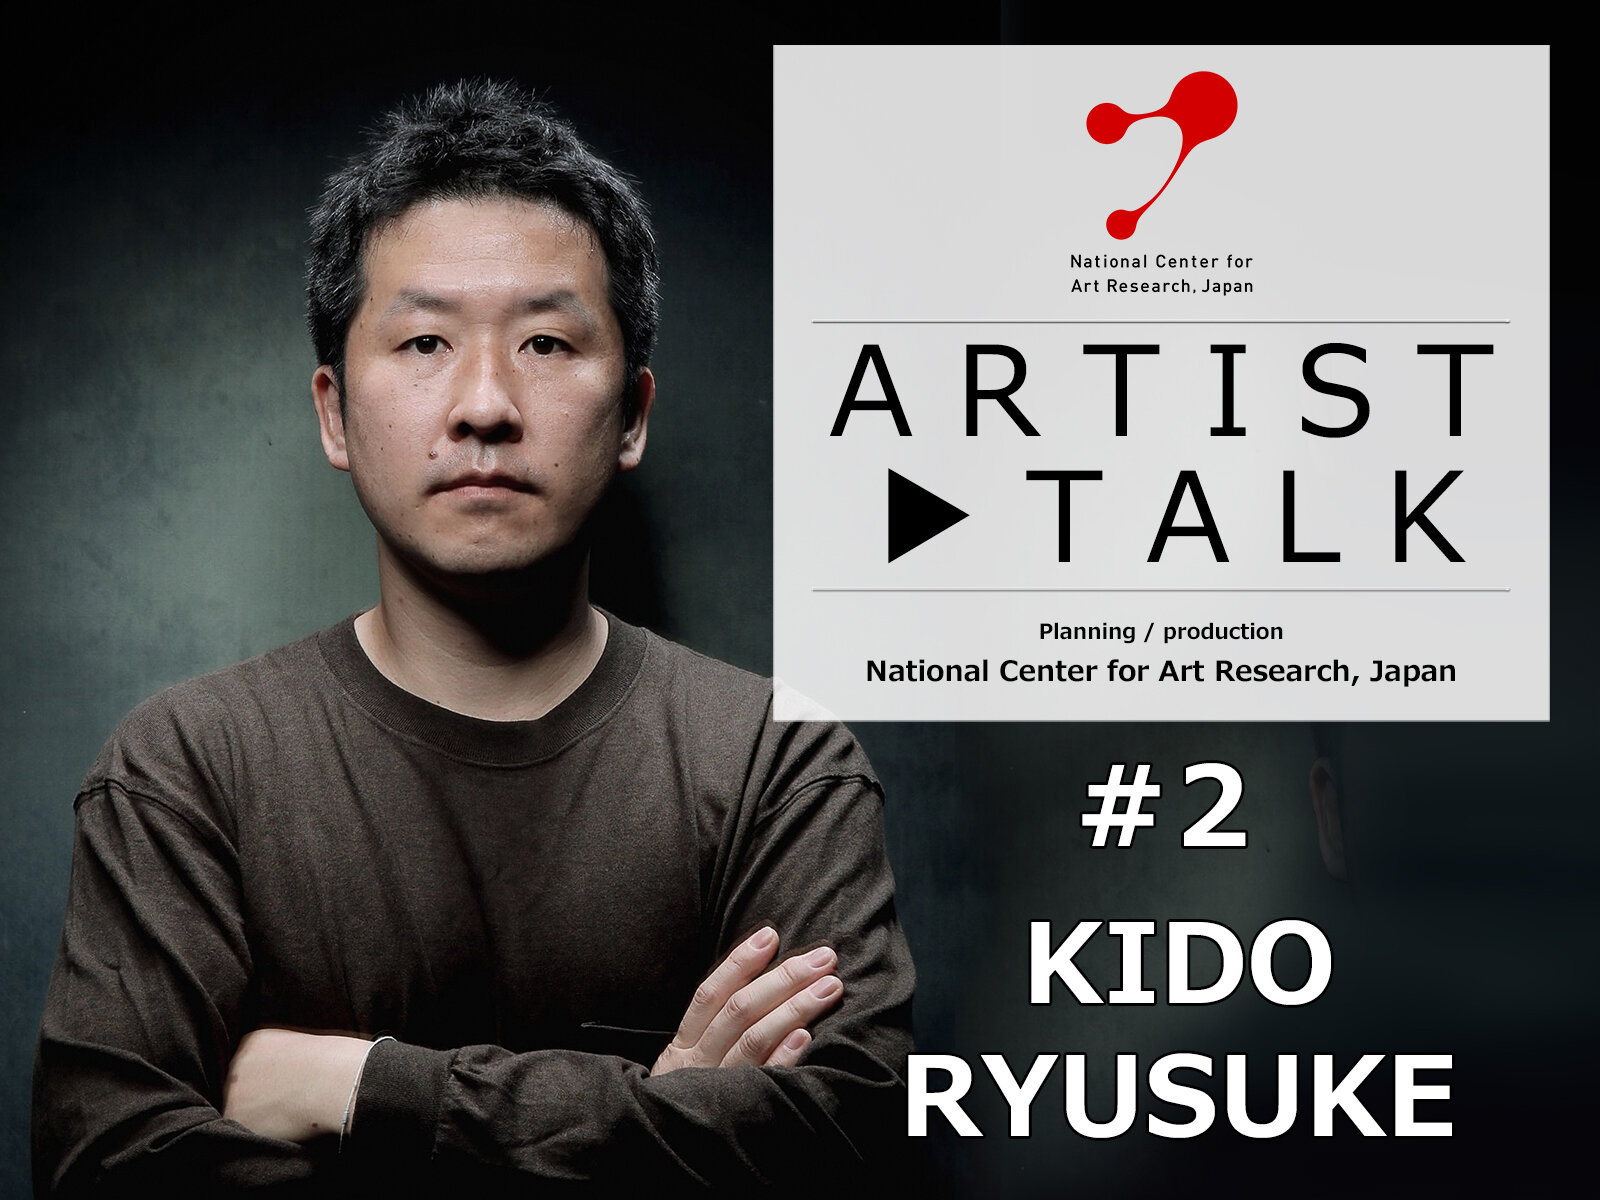 【Artist Talk #2】Kido Ryusuke

